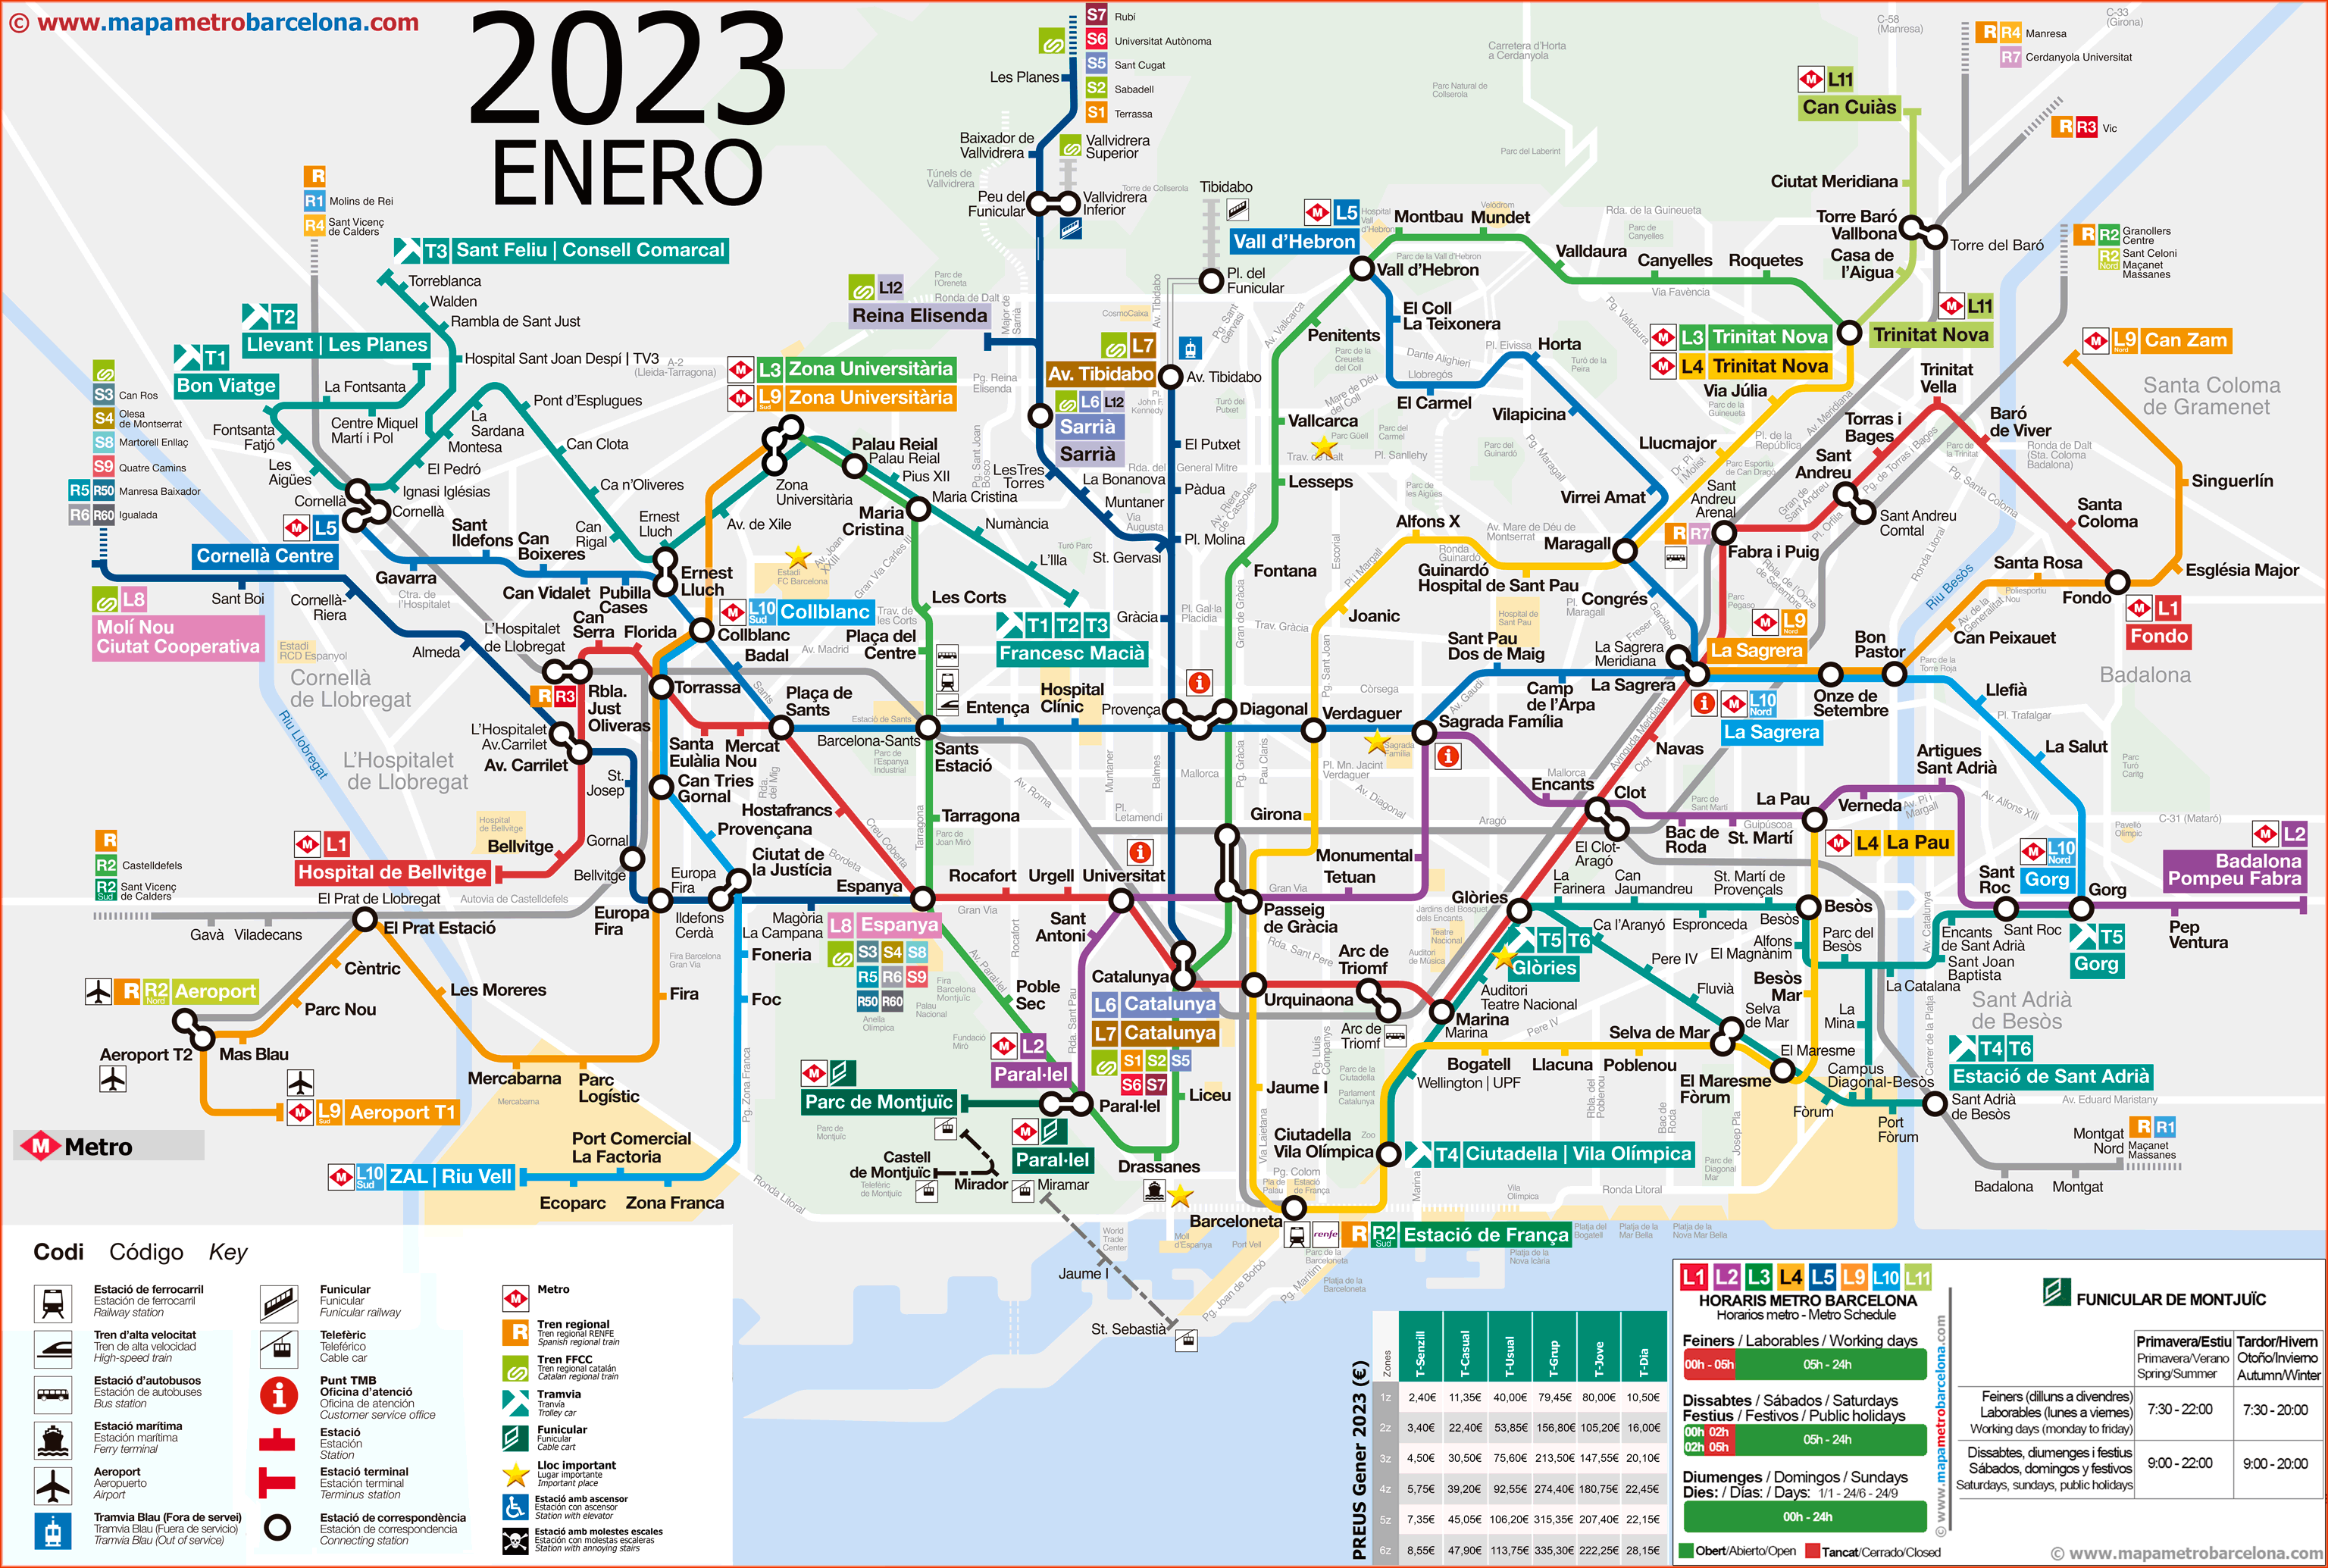 Metro map of Barcelona updated 2023